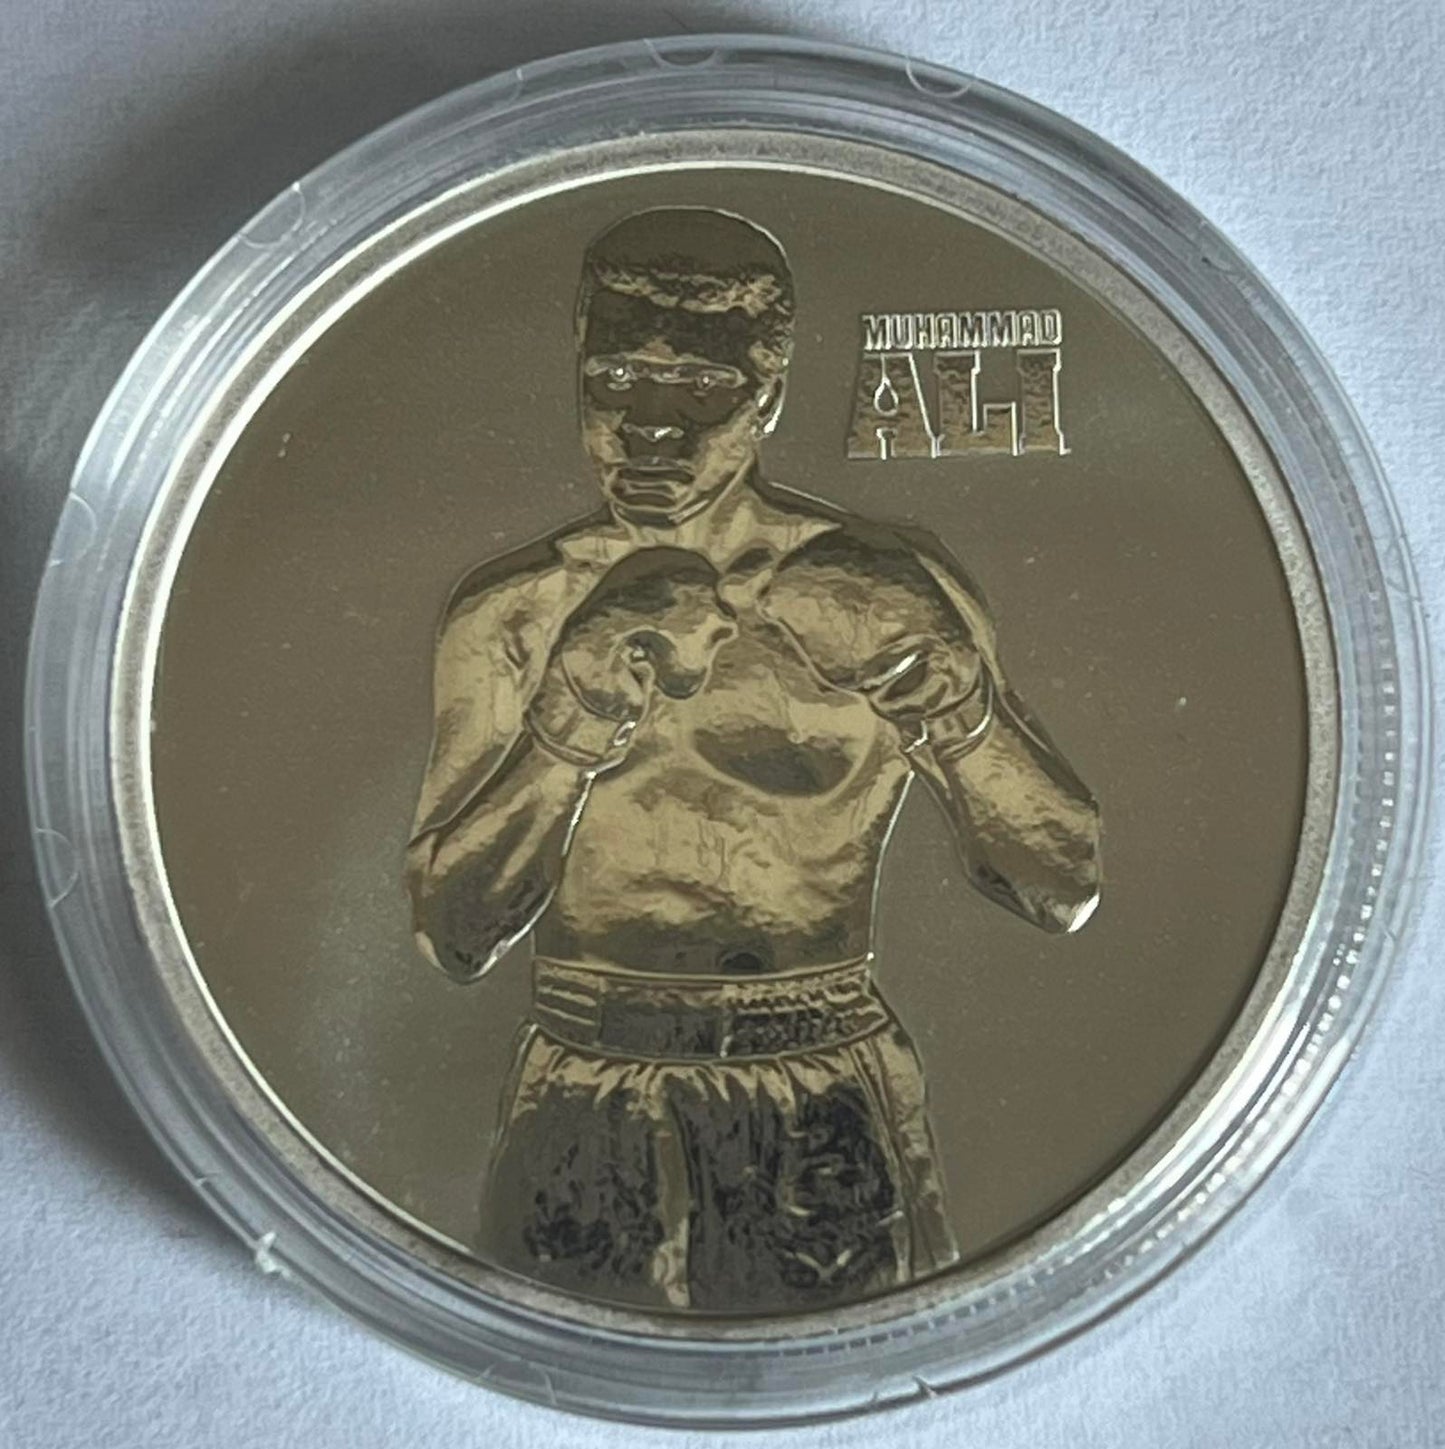 2023 Niue Muhammad Ali 1 oz Silver Coin BU in Capsule